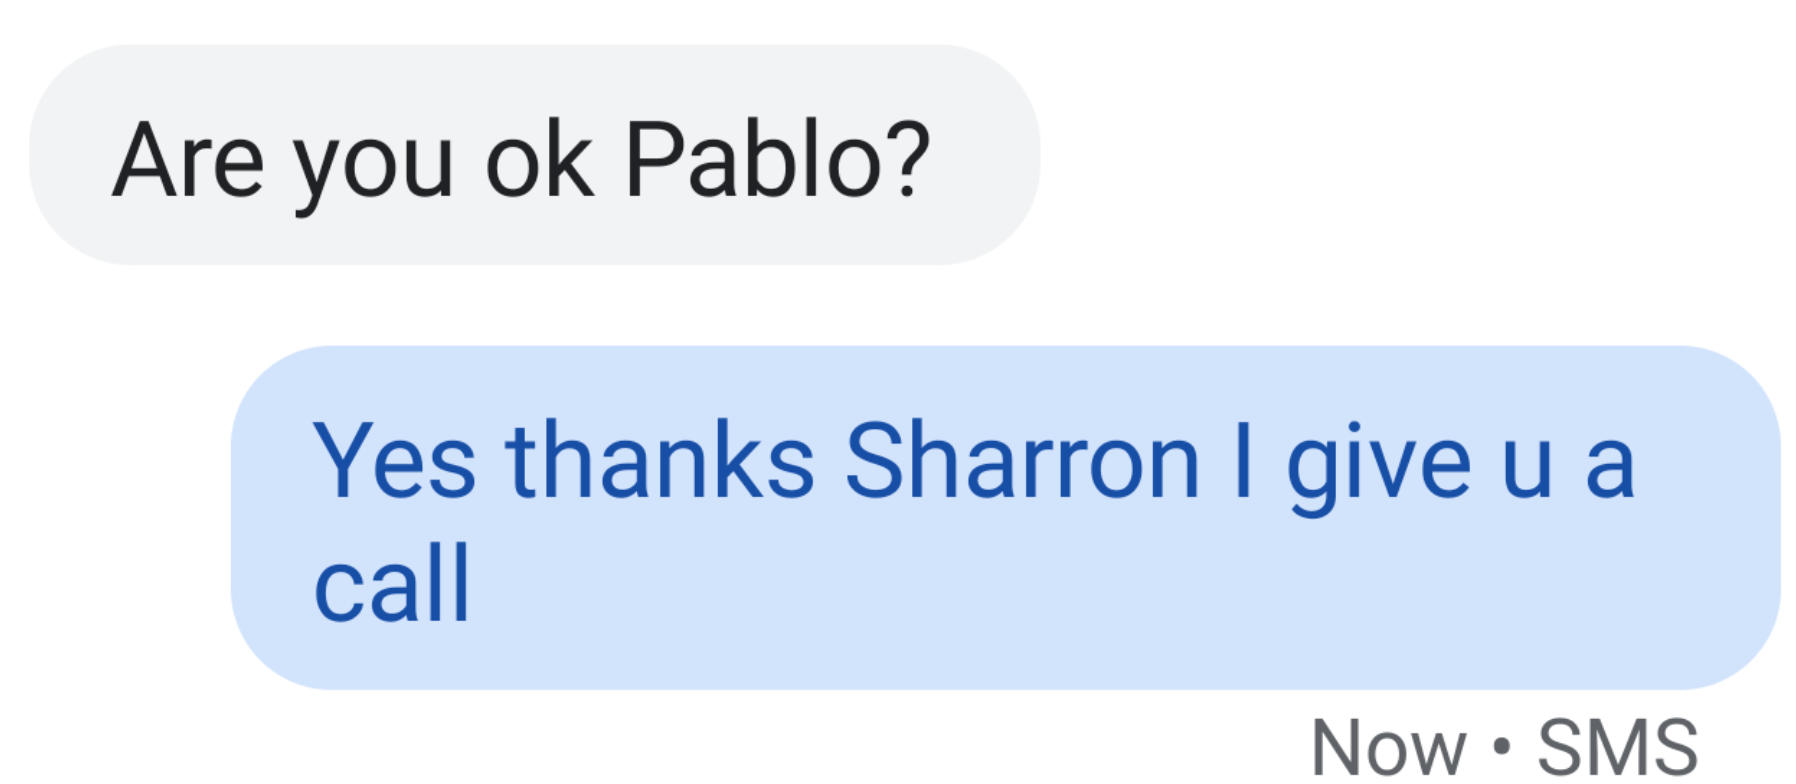 Sharron had sent a text 